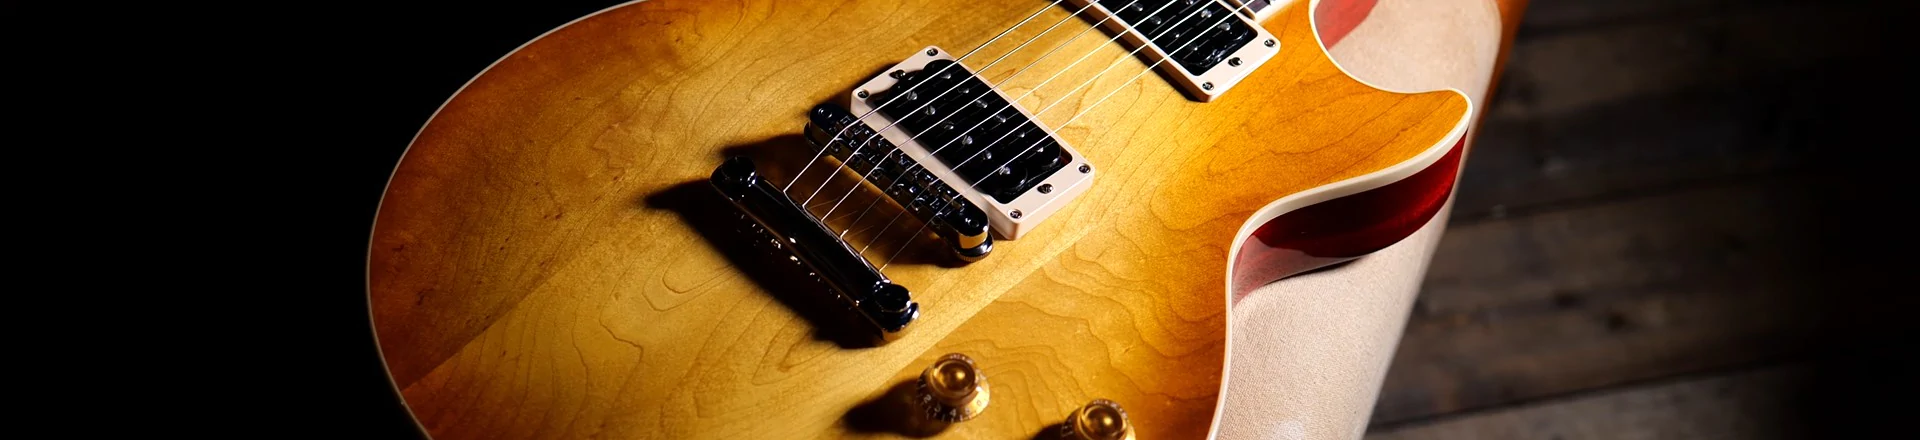 Gibson Slash "Jessica" LP Standard - klasyka w cylindrze